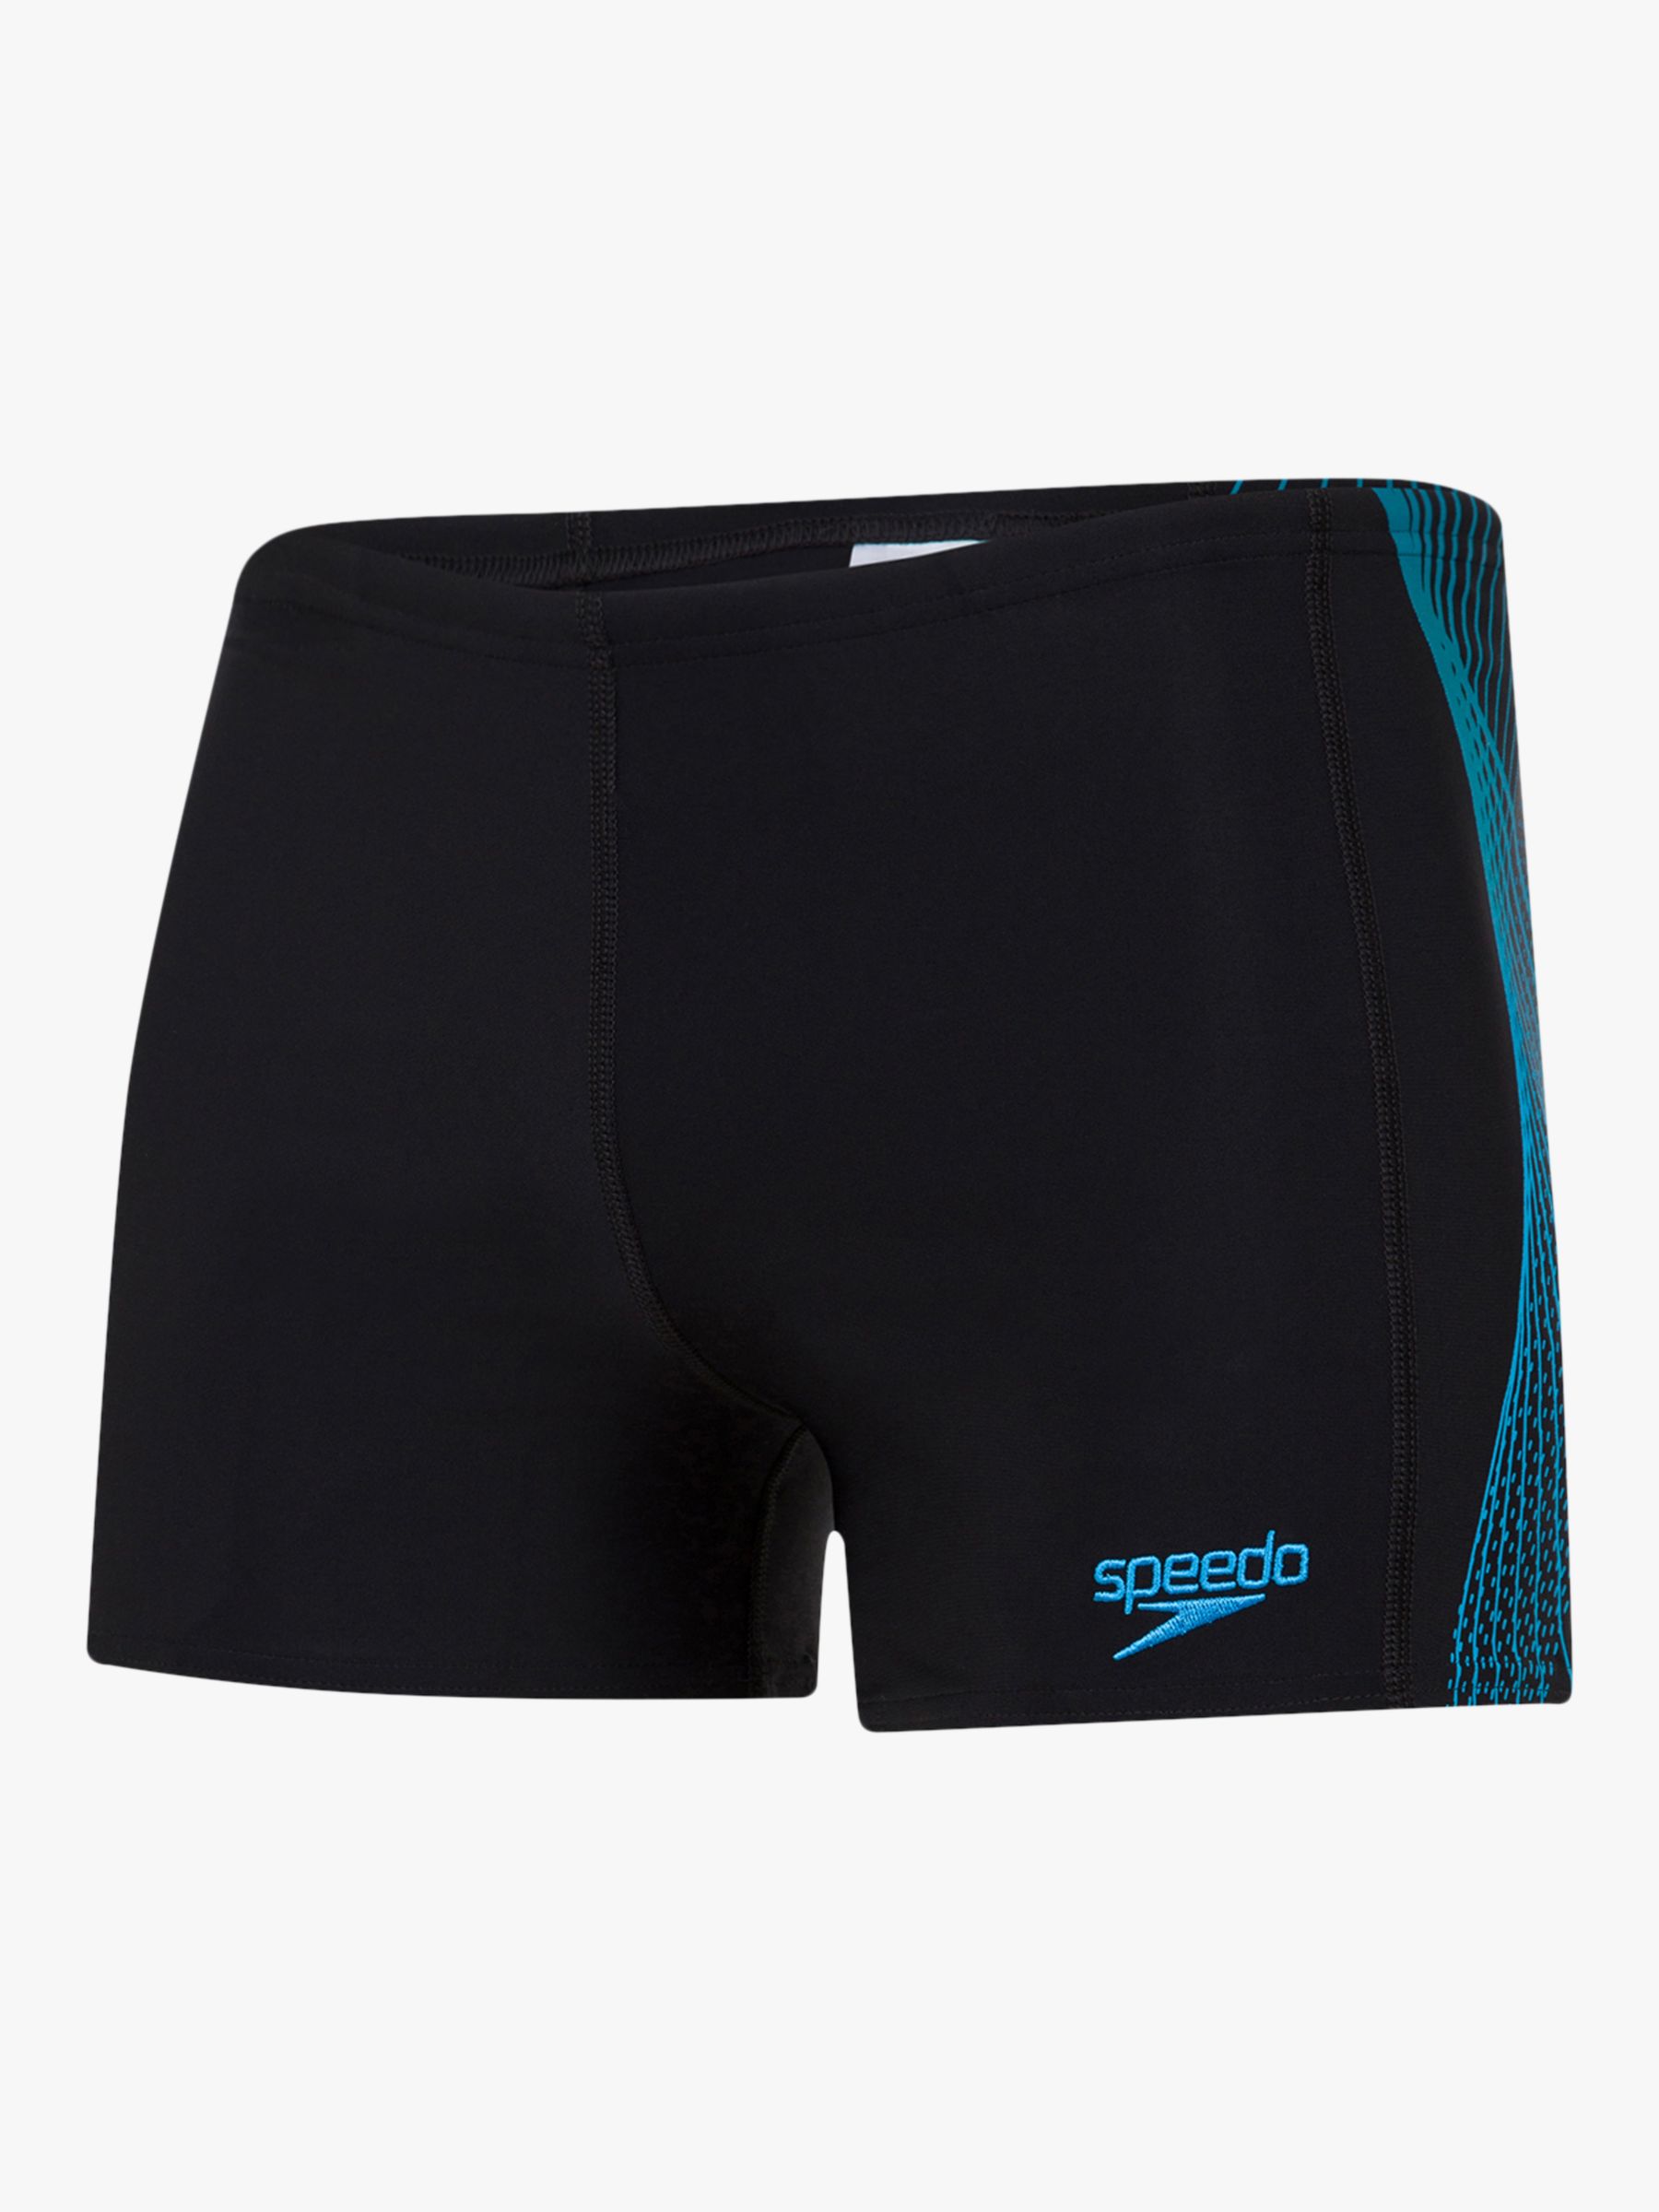 Speedo Speedo Tech Panel Aquashort Swim Shorts, Black/Teal/Pool